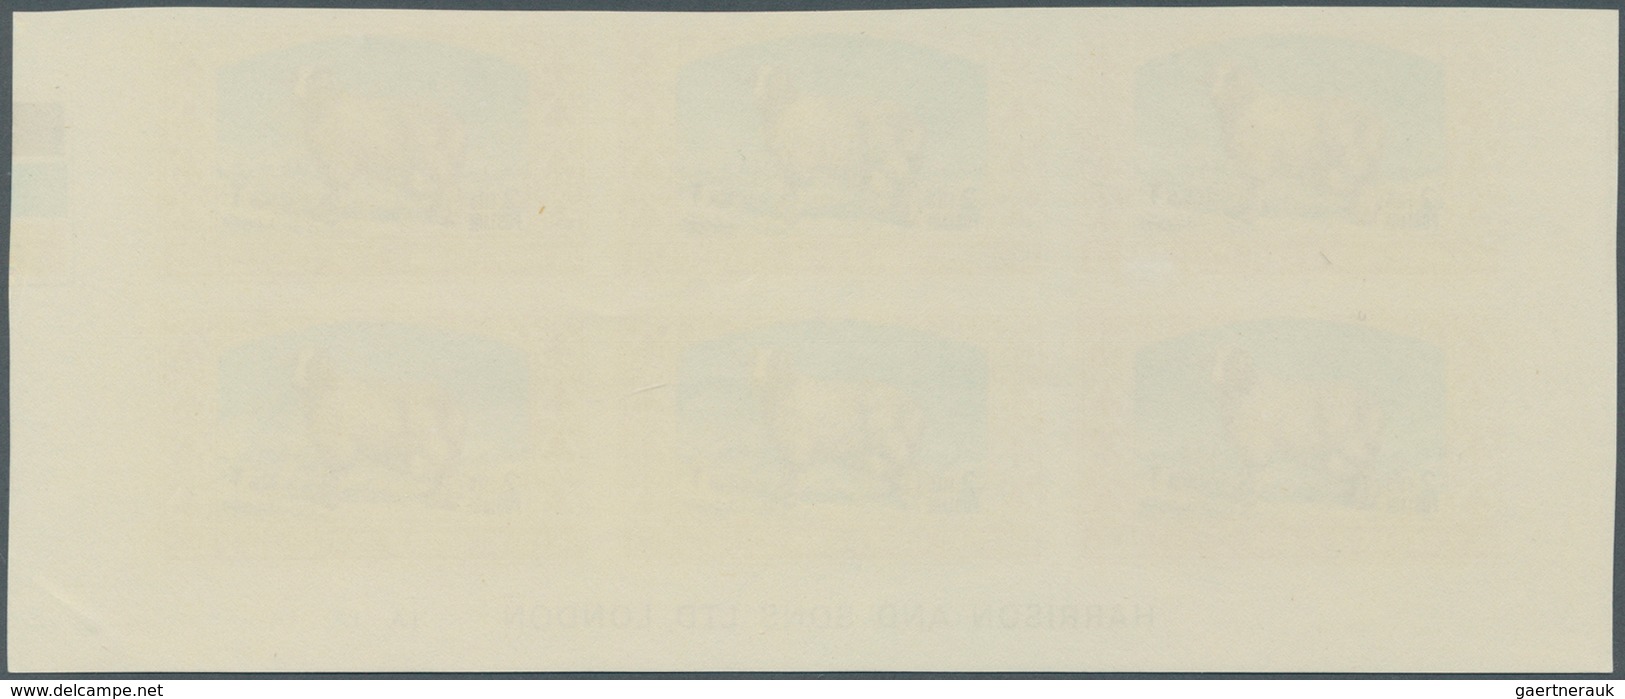 09183 Jordanien: 1967, Animals, imperforate, complete set of six values as marginal plate blocks of six, u